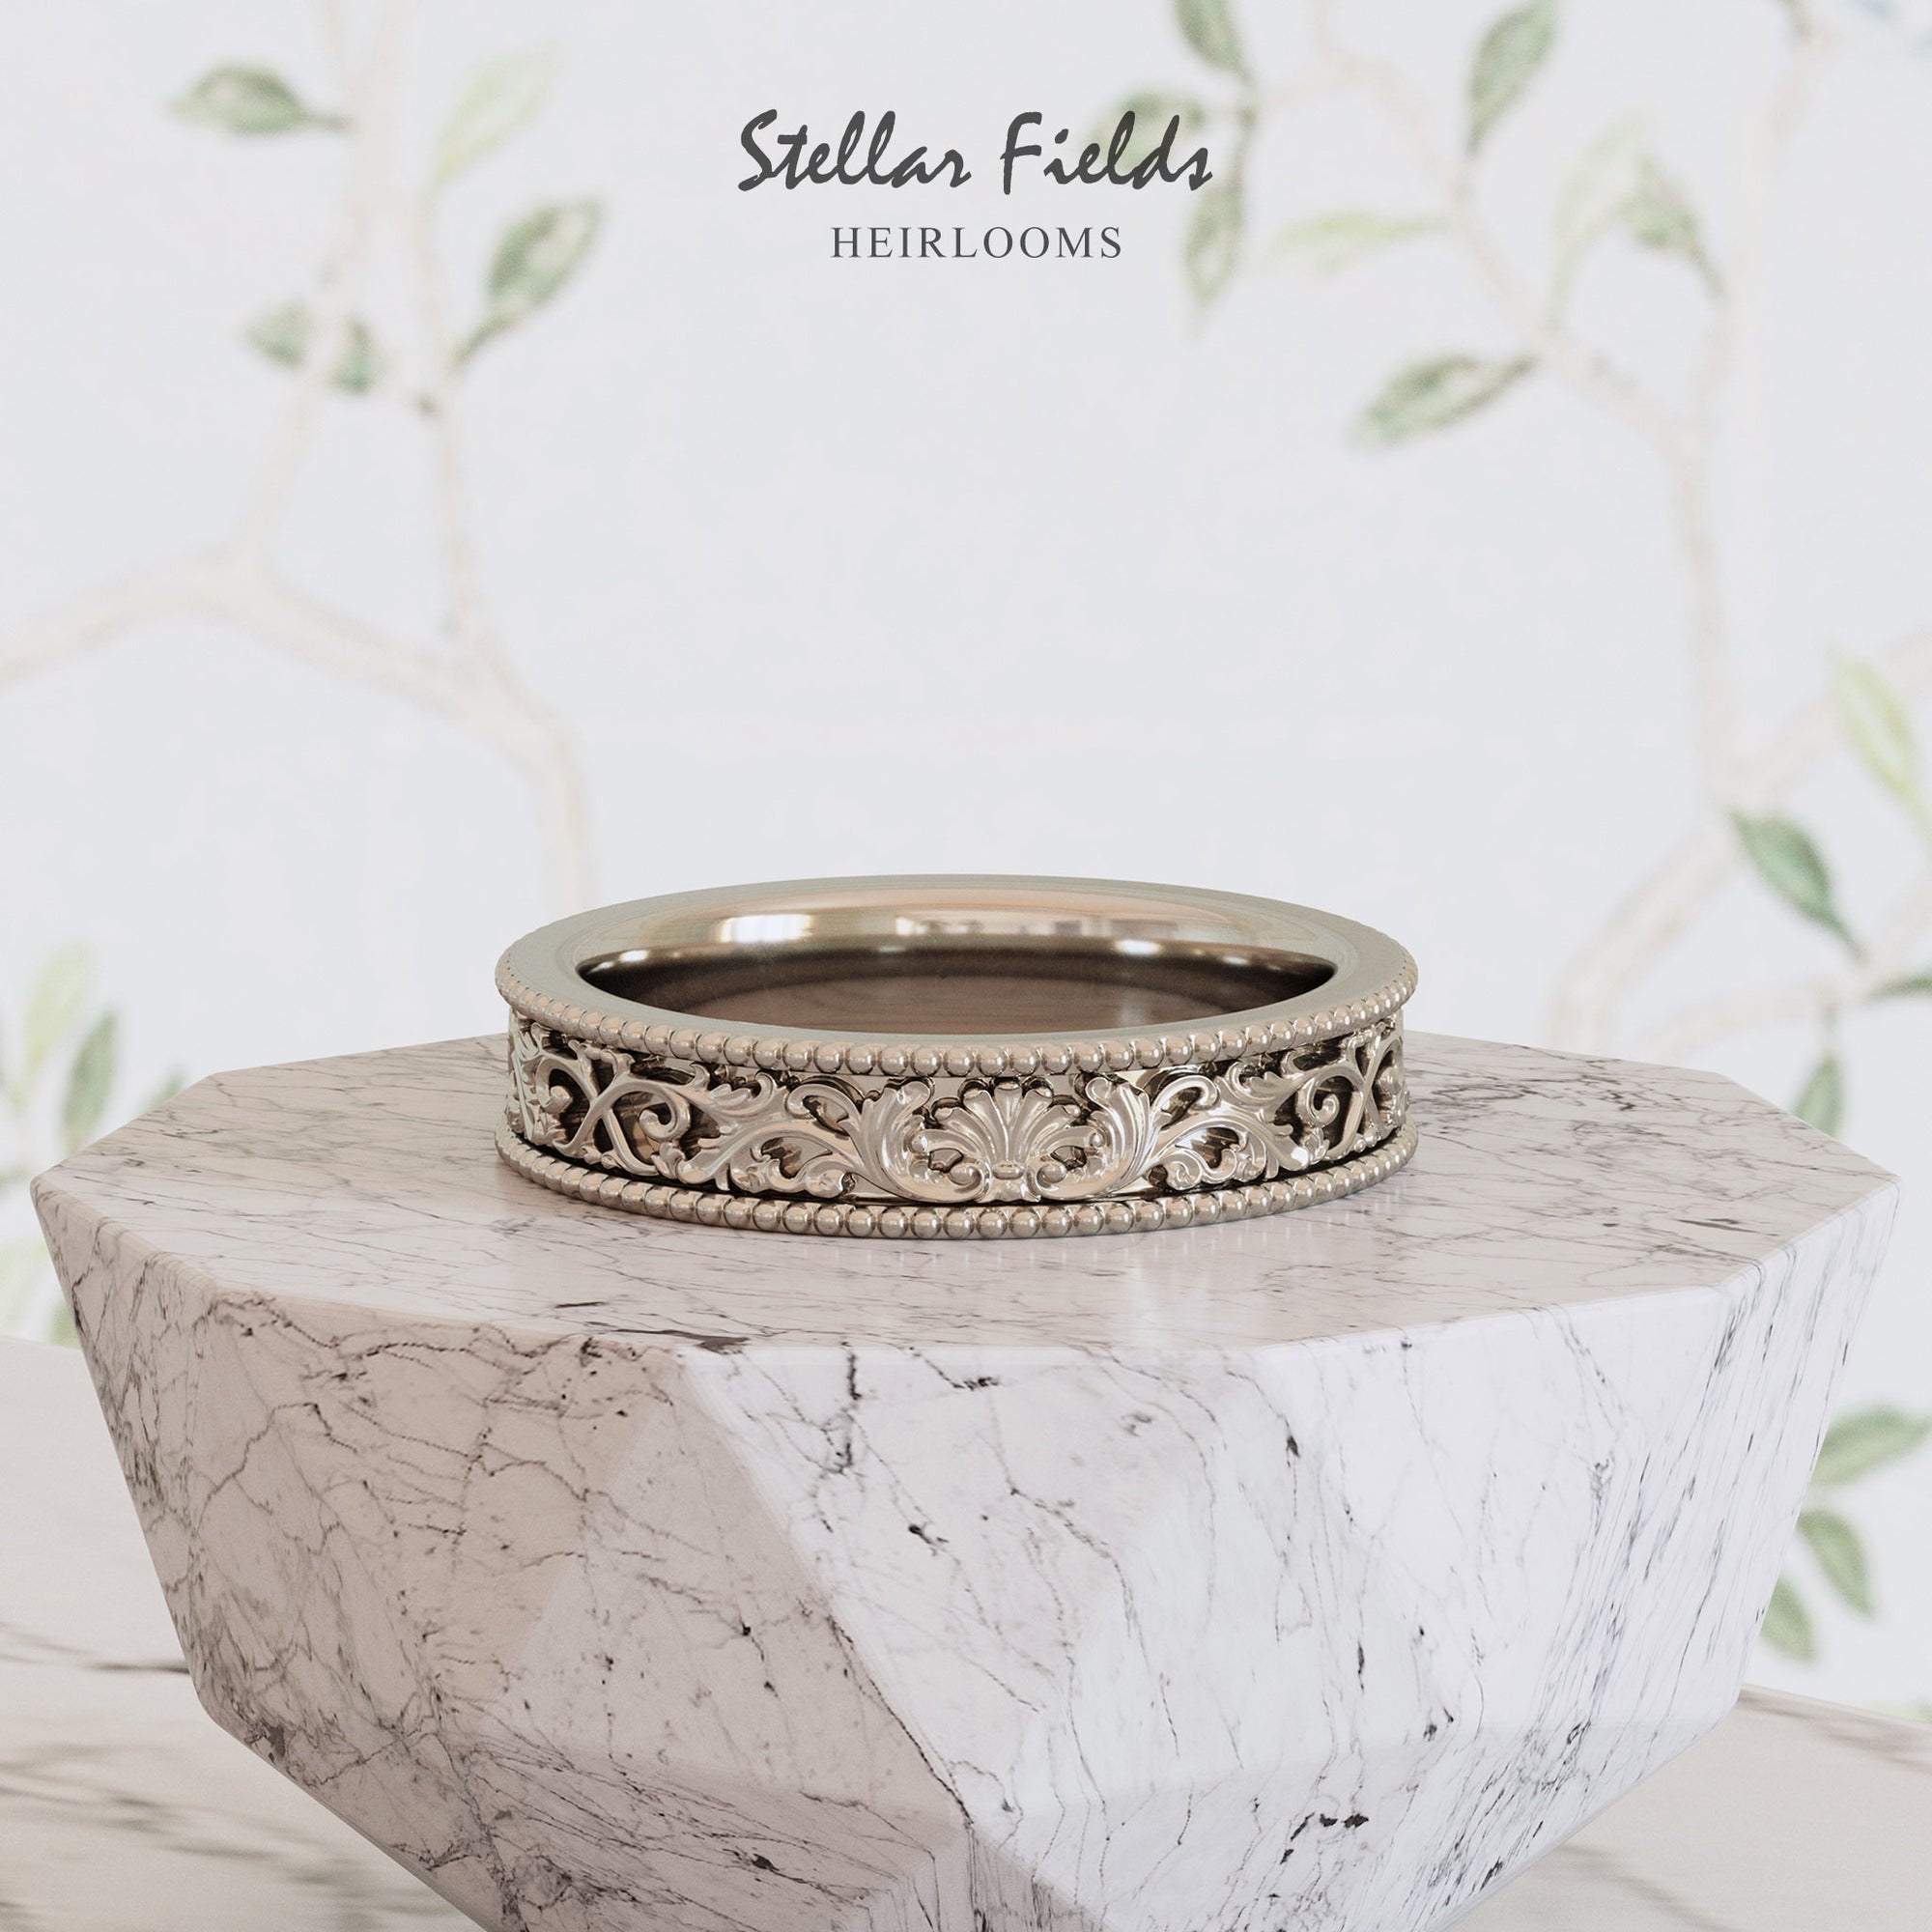 Vintage Scroll Wedding Ring Shell Beads - Joelle Platinum Stellar Fields Jewelry